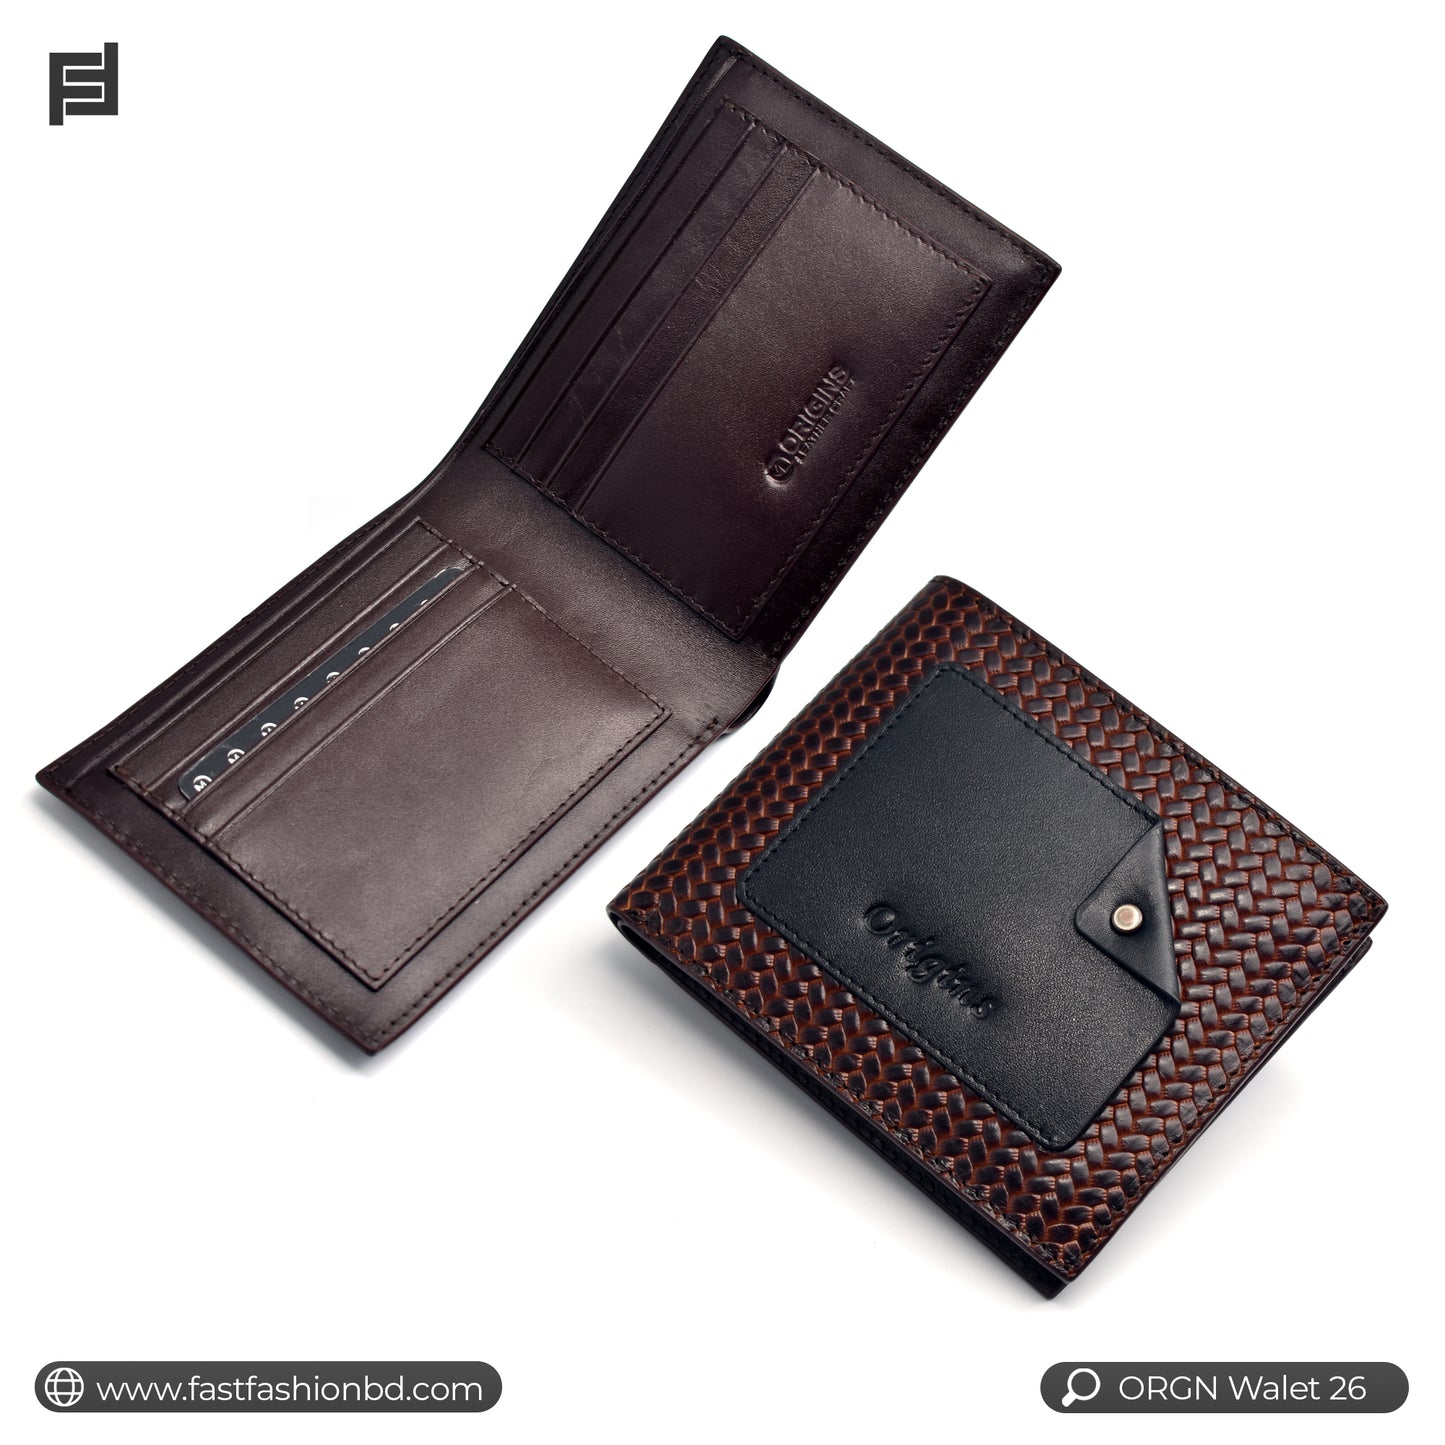 Pocket Size Premium Quality Leather Wallet for Men | ORGN Wallet 26